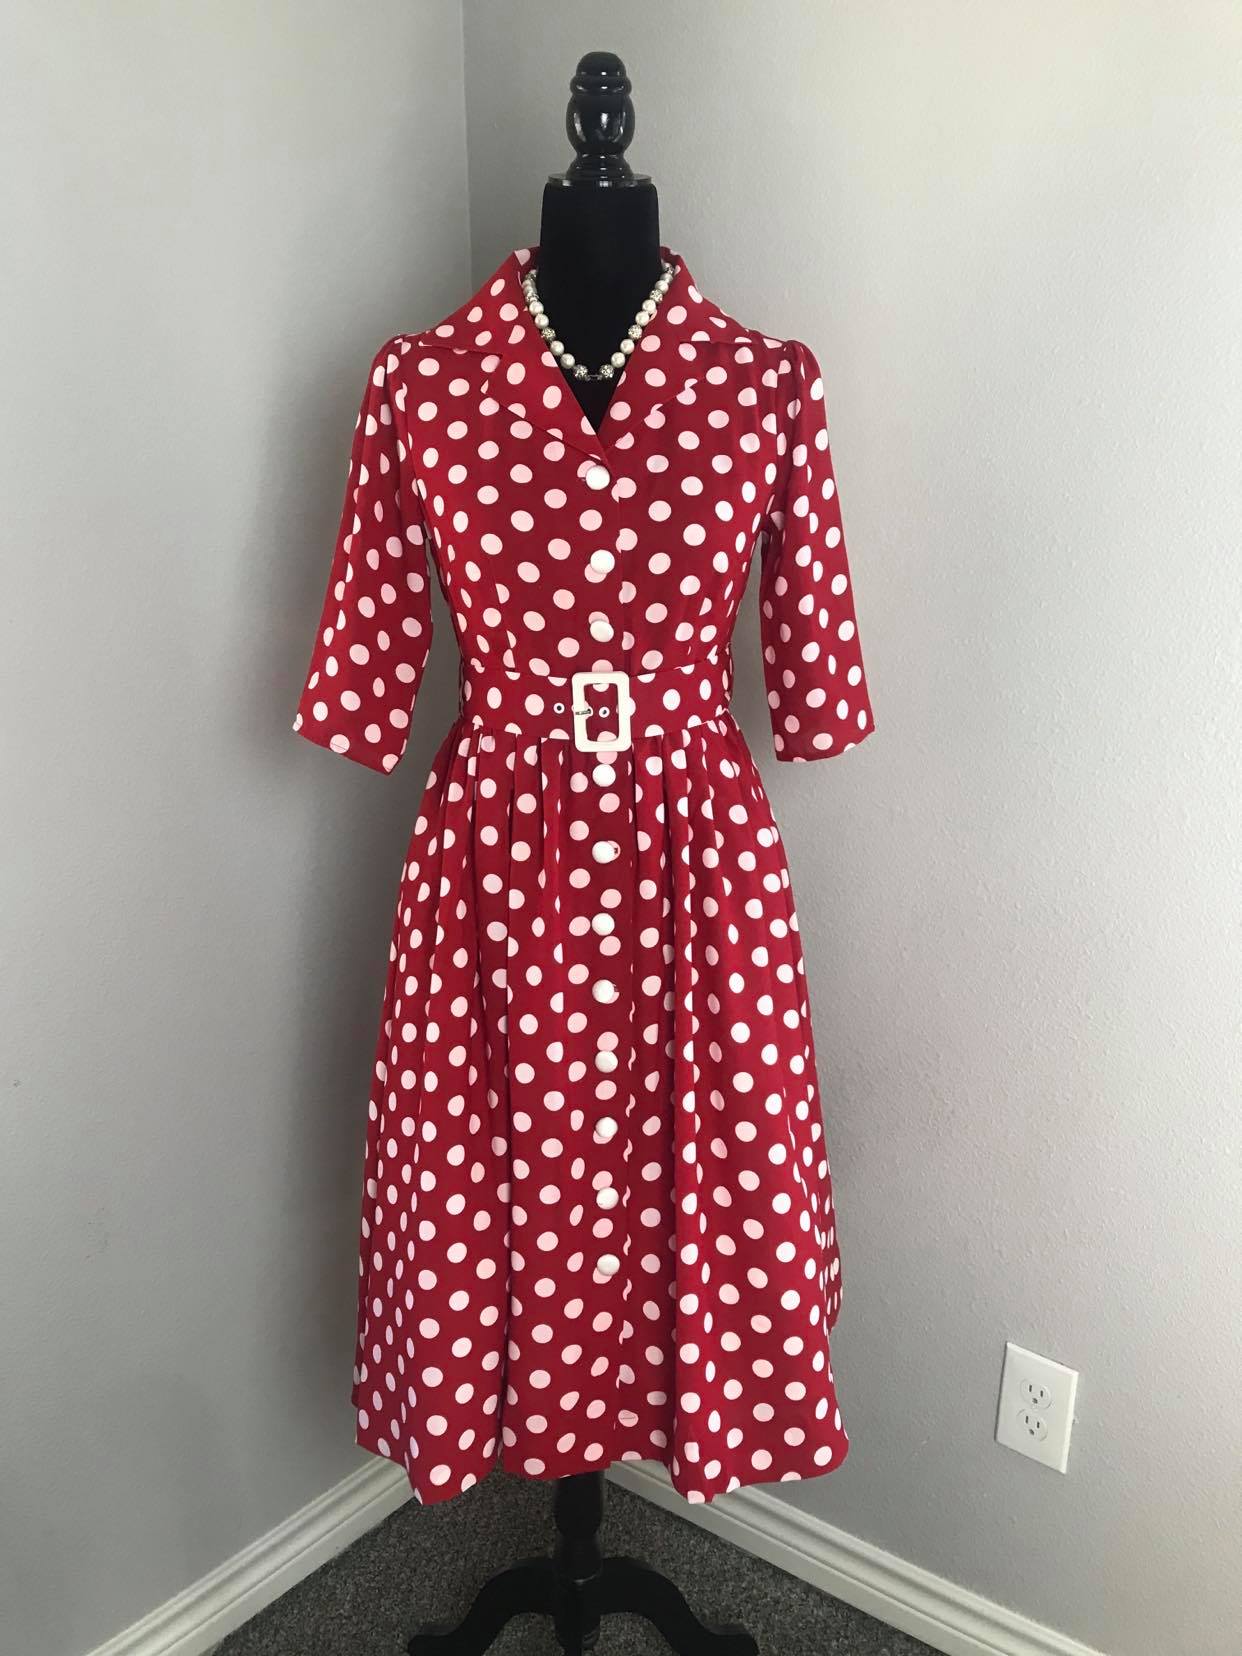 Kathy Dress in Red White Polka Dots - Shop women style vintage, Audrey Hepburn jackets online -Christine